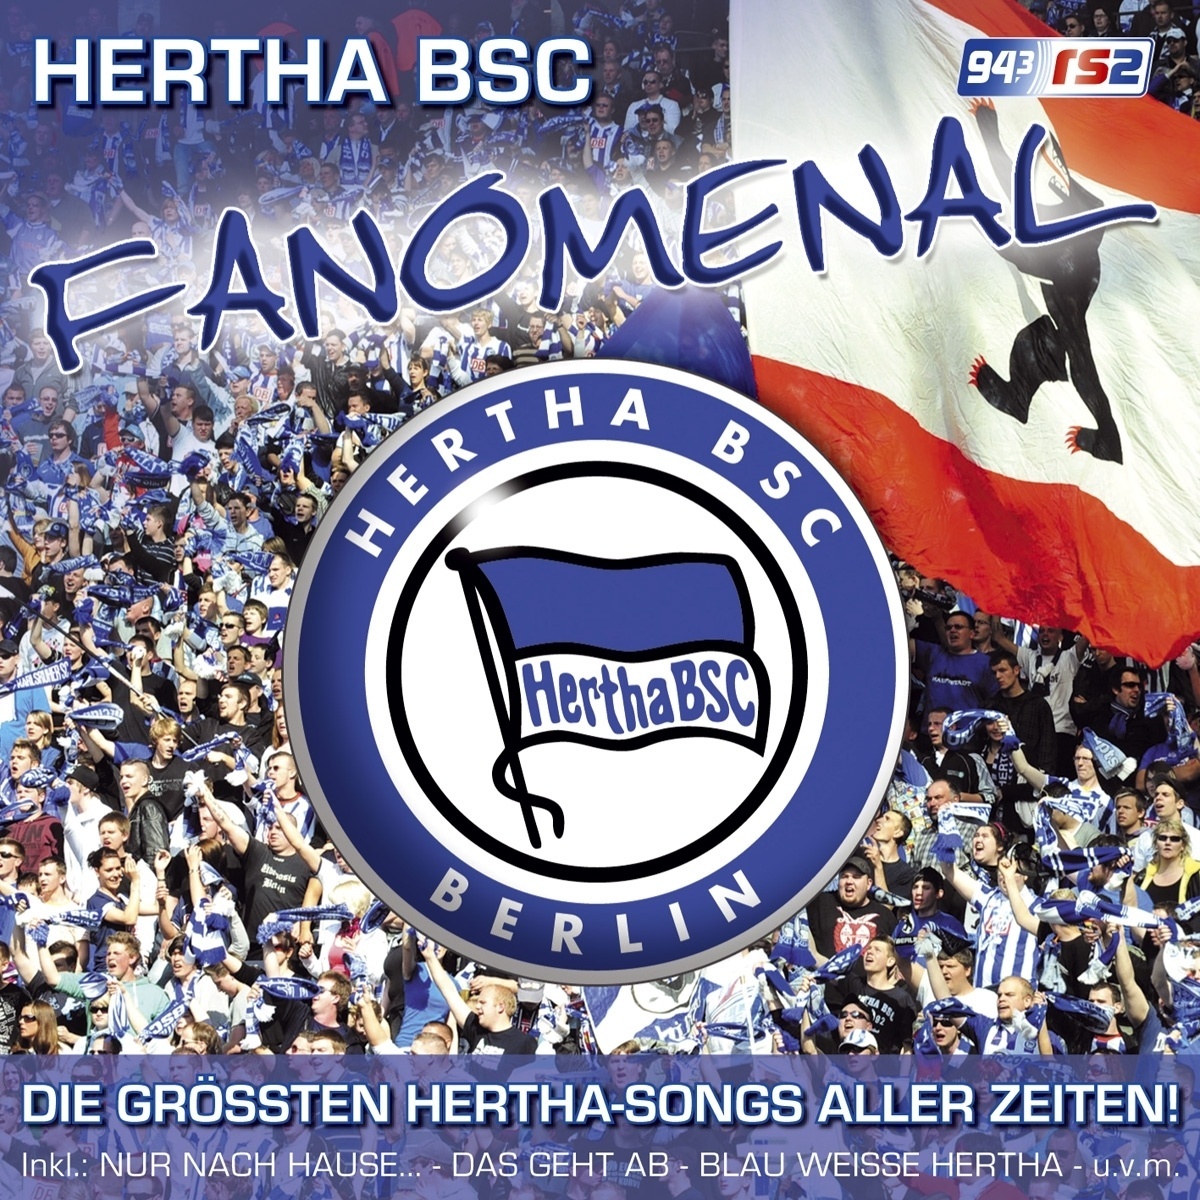 Hertha Bsc-Fanomenal - Various. (CD)